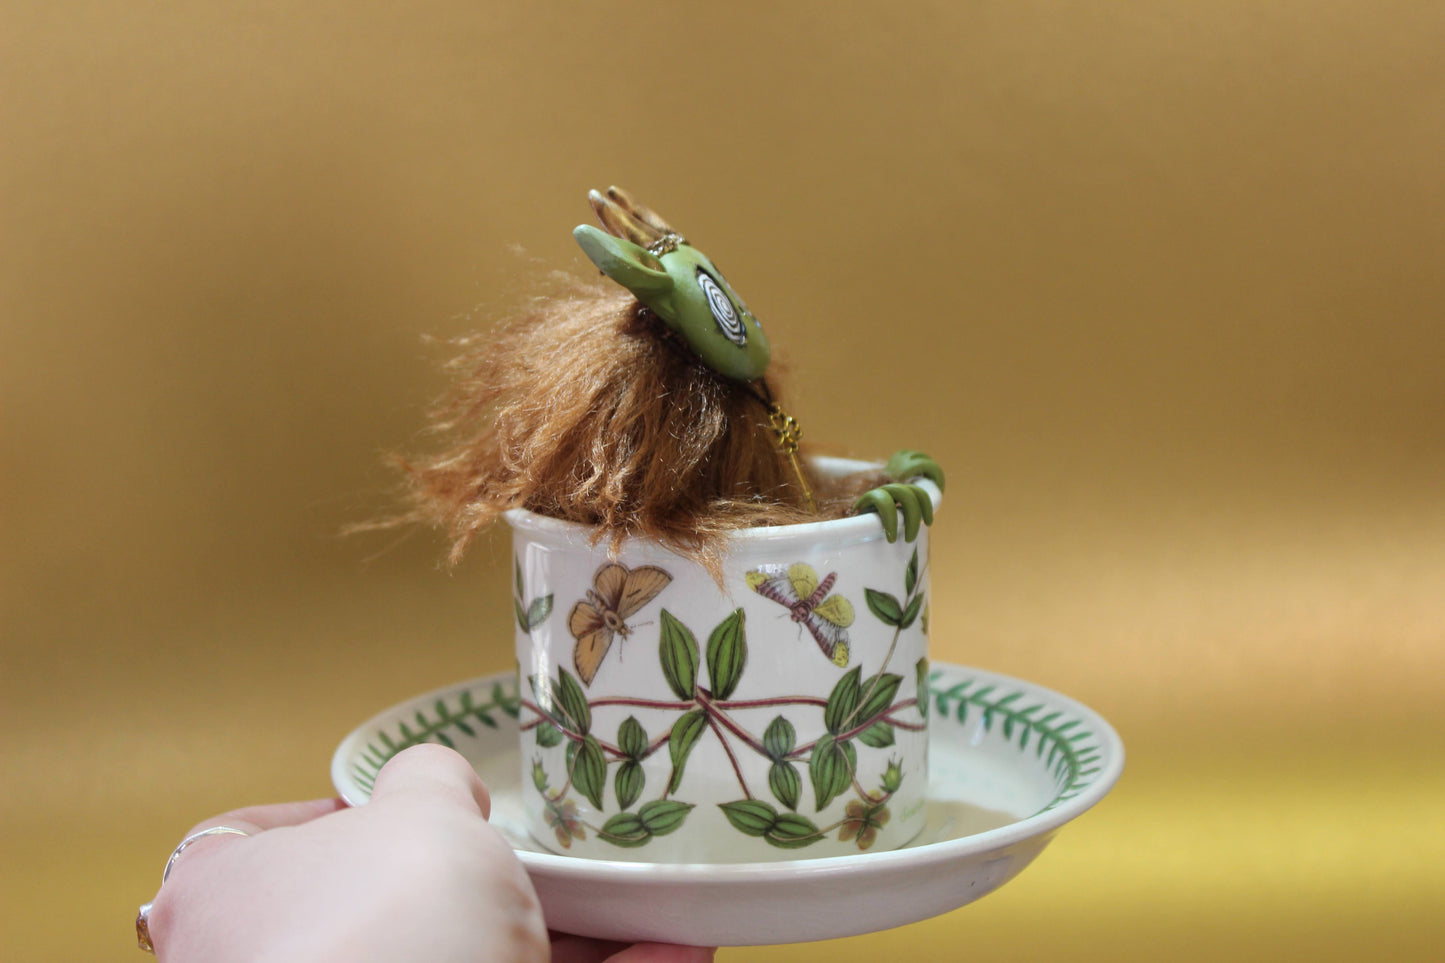 Acorn the Teacup Critter